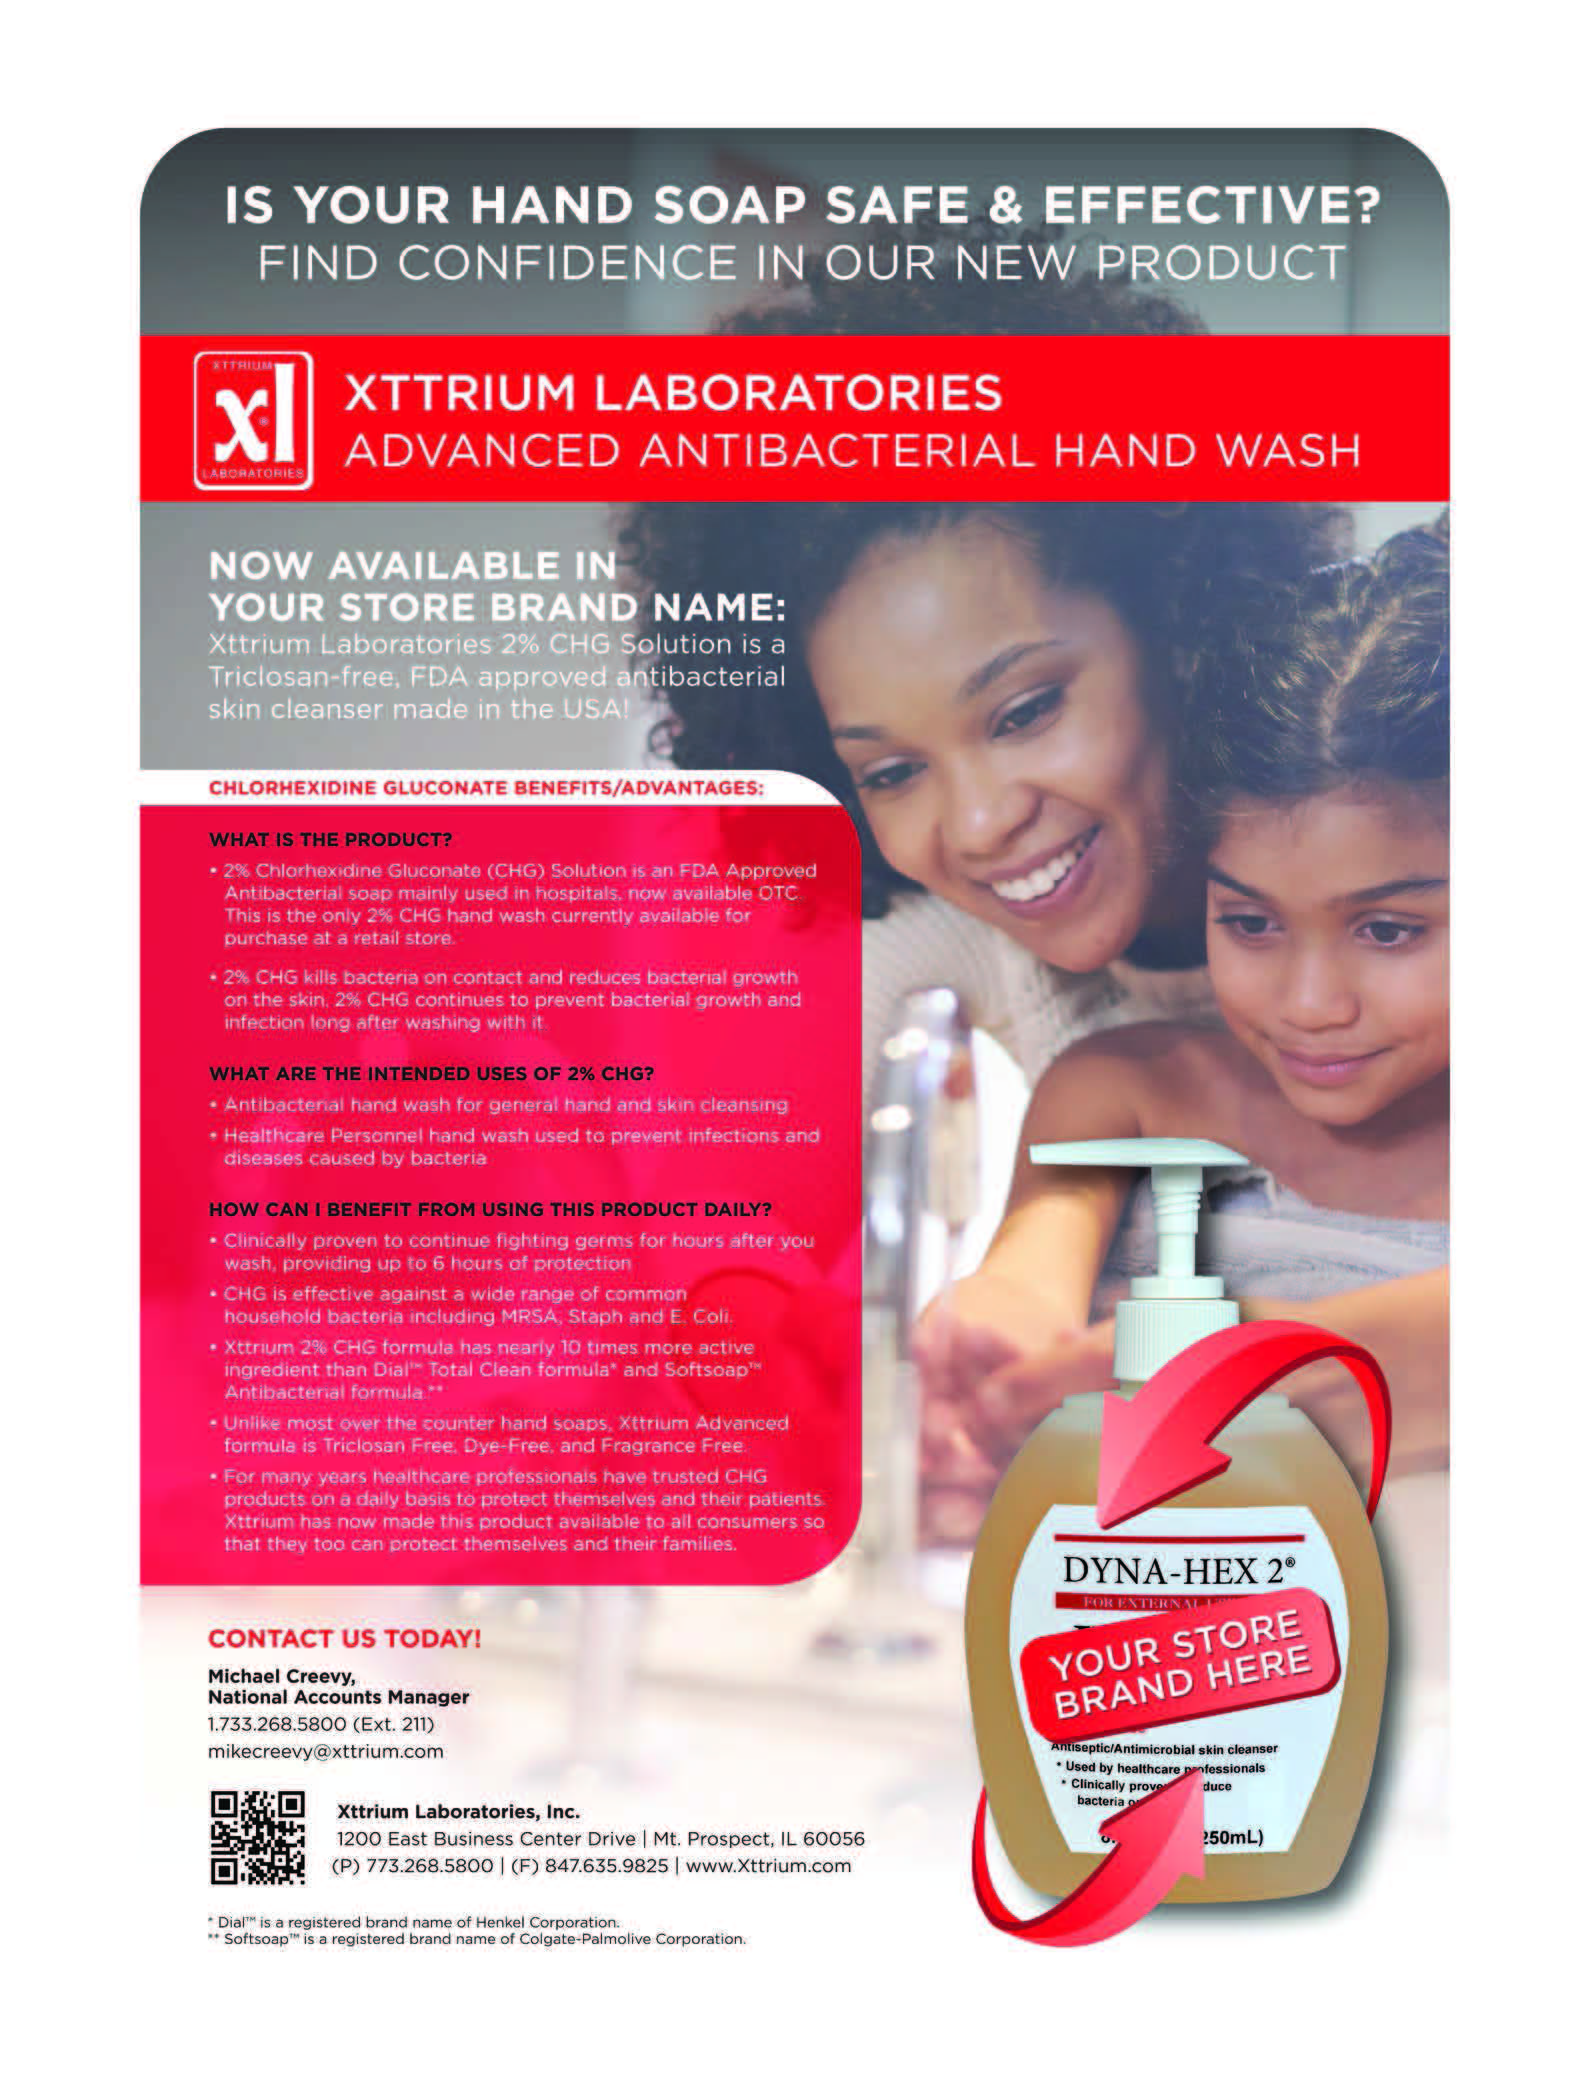 Advanced Antibacterial Hand Soap with 2% Chlorhexidine by Xttrium Laboratories, Inc